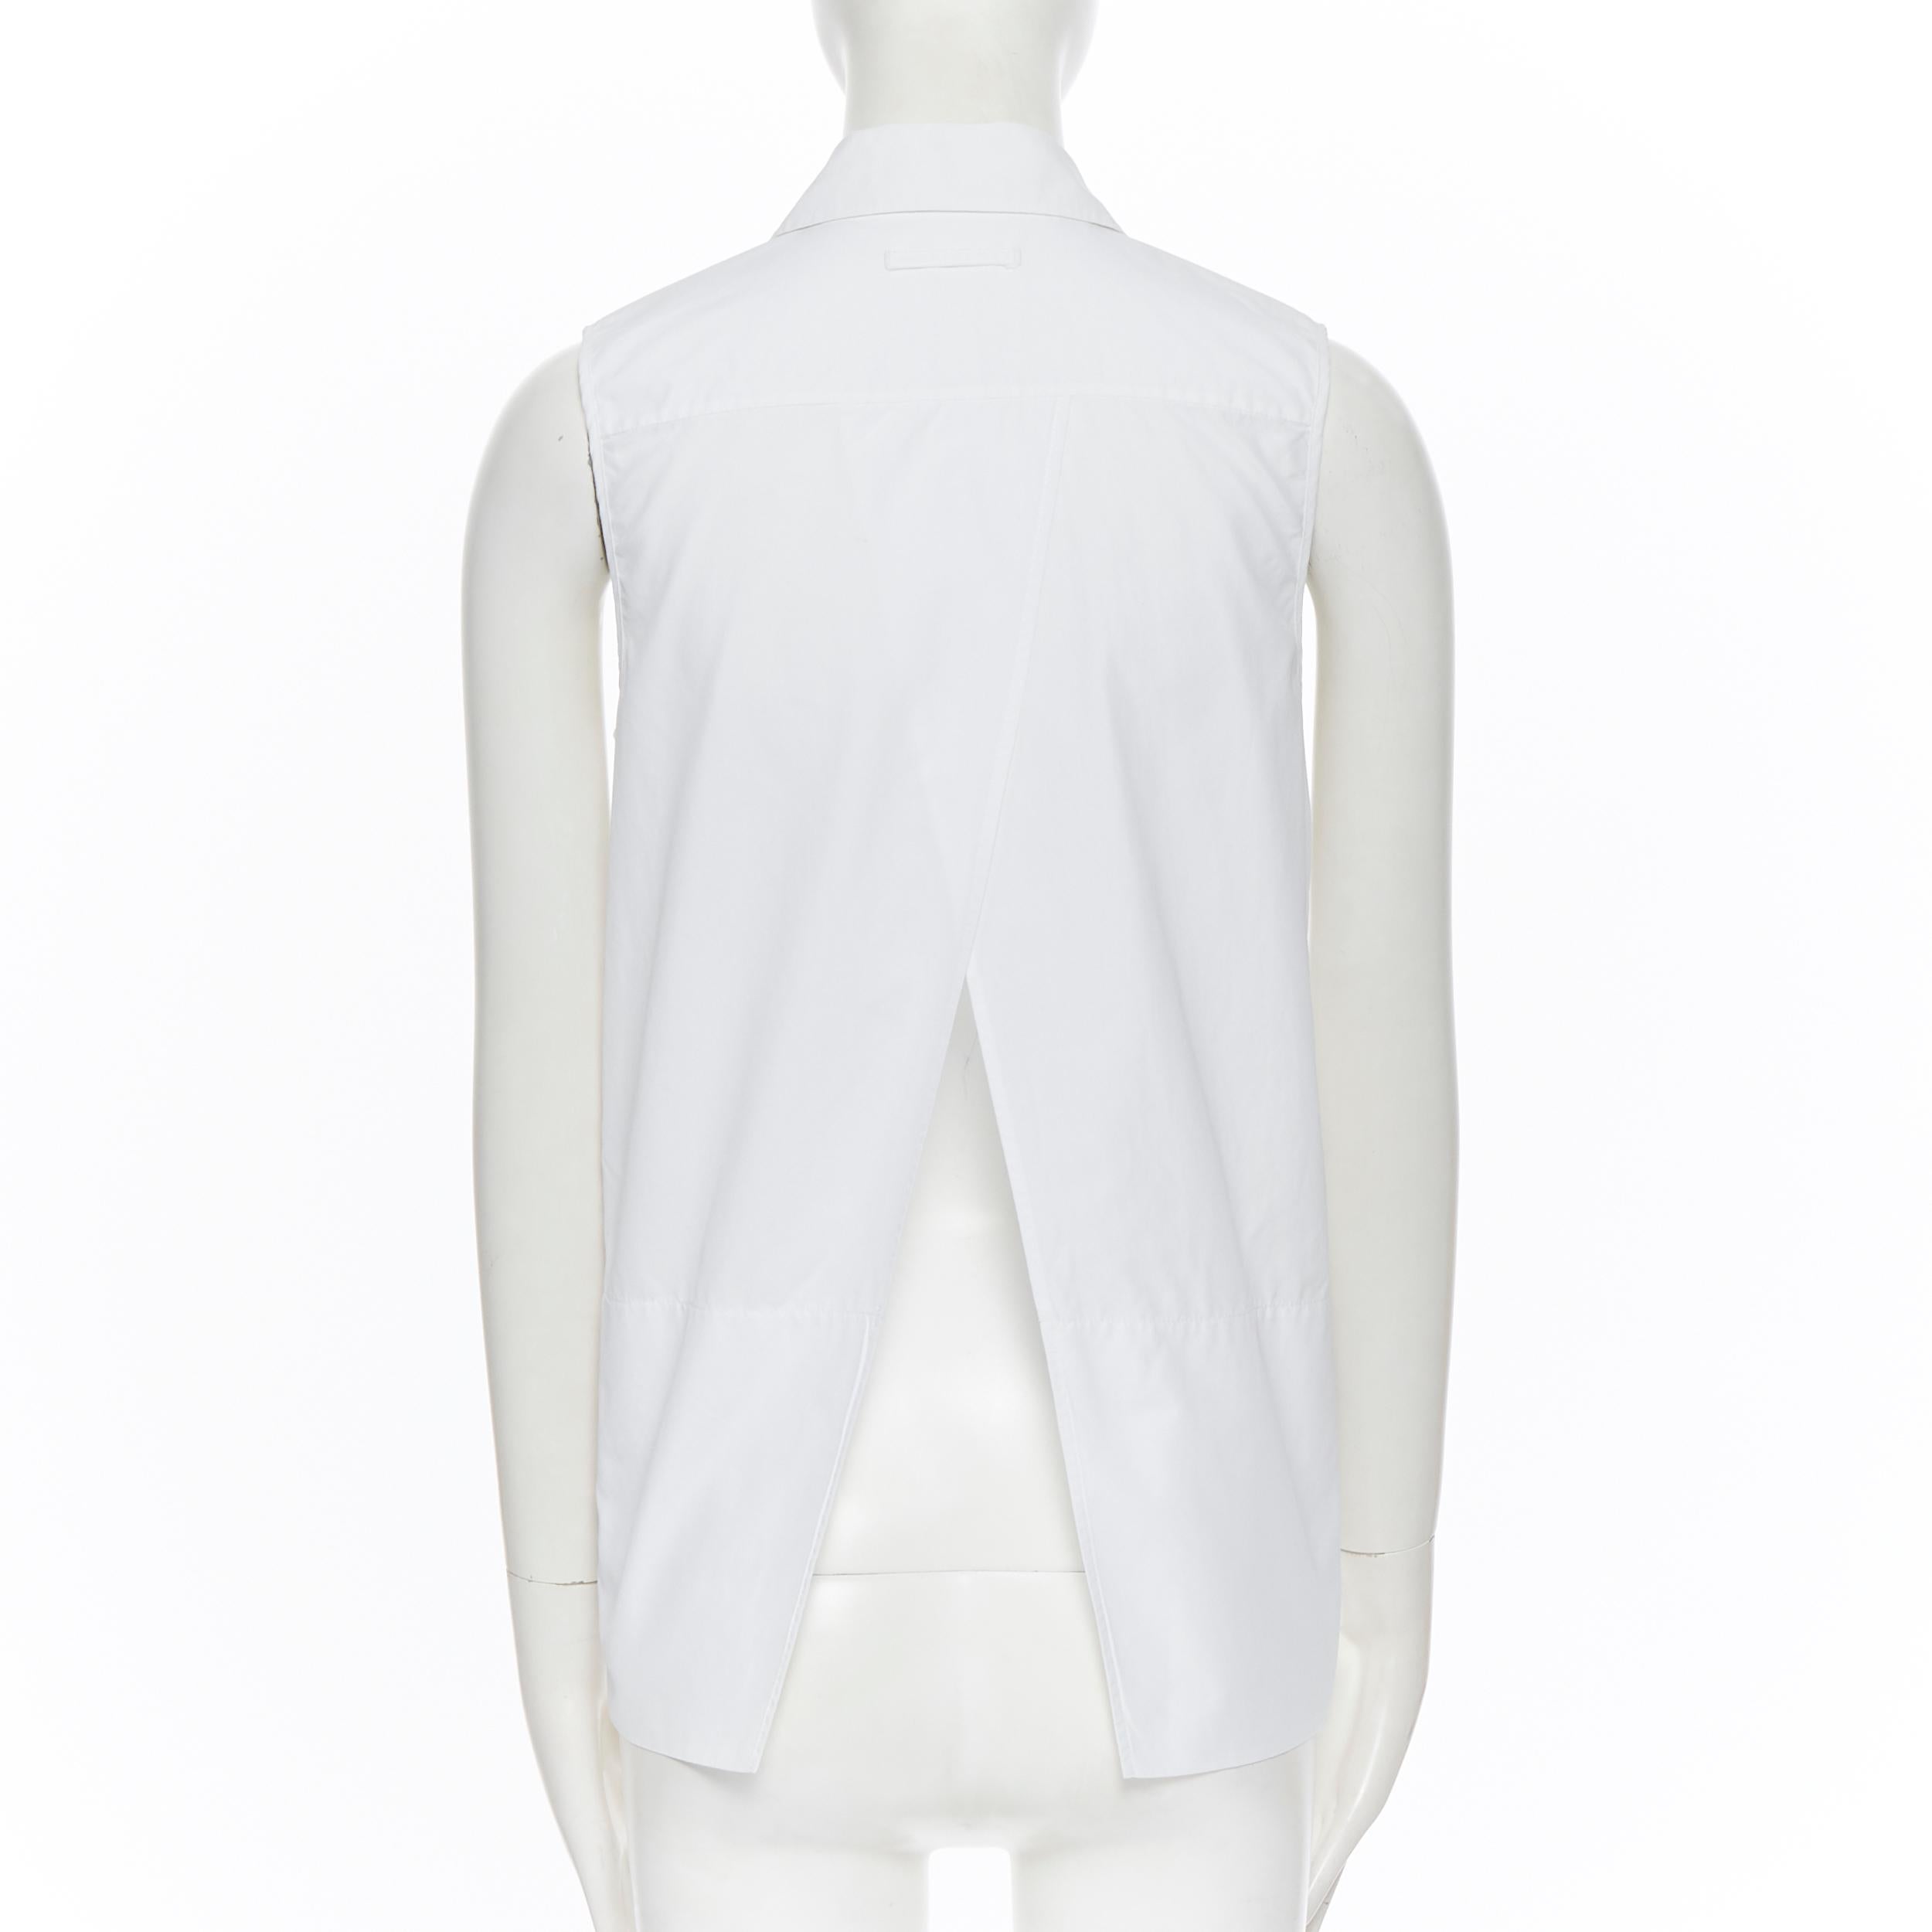 Gray VICTORIA BECKHAM JEANS white cotton splt open back sleeveless shirt UK6